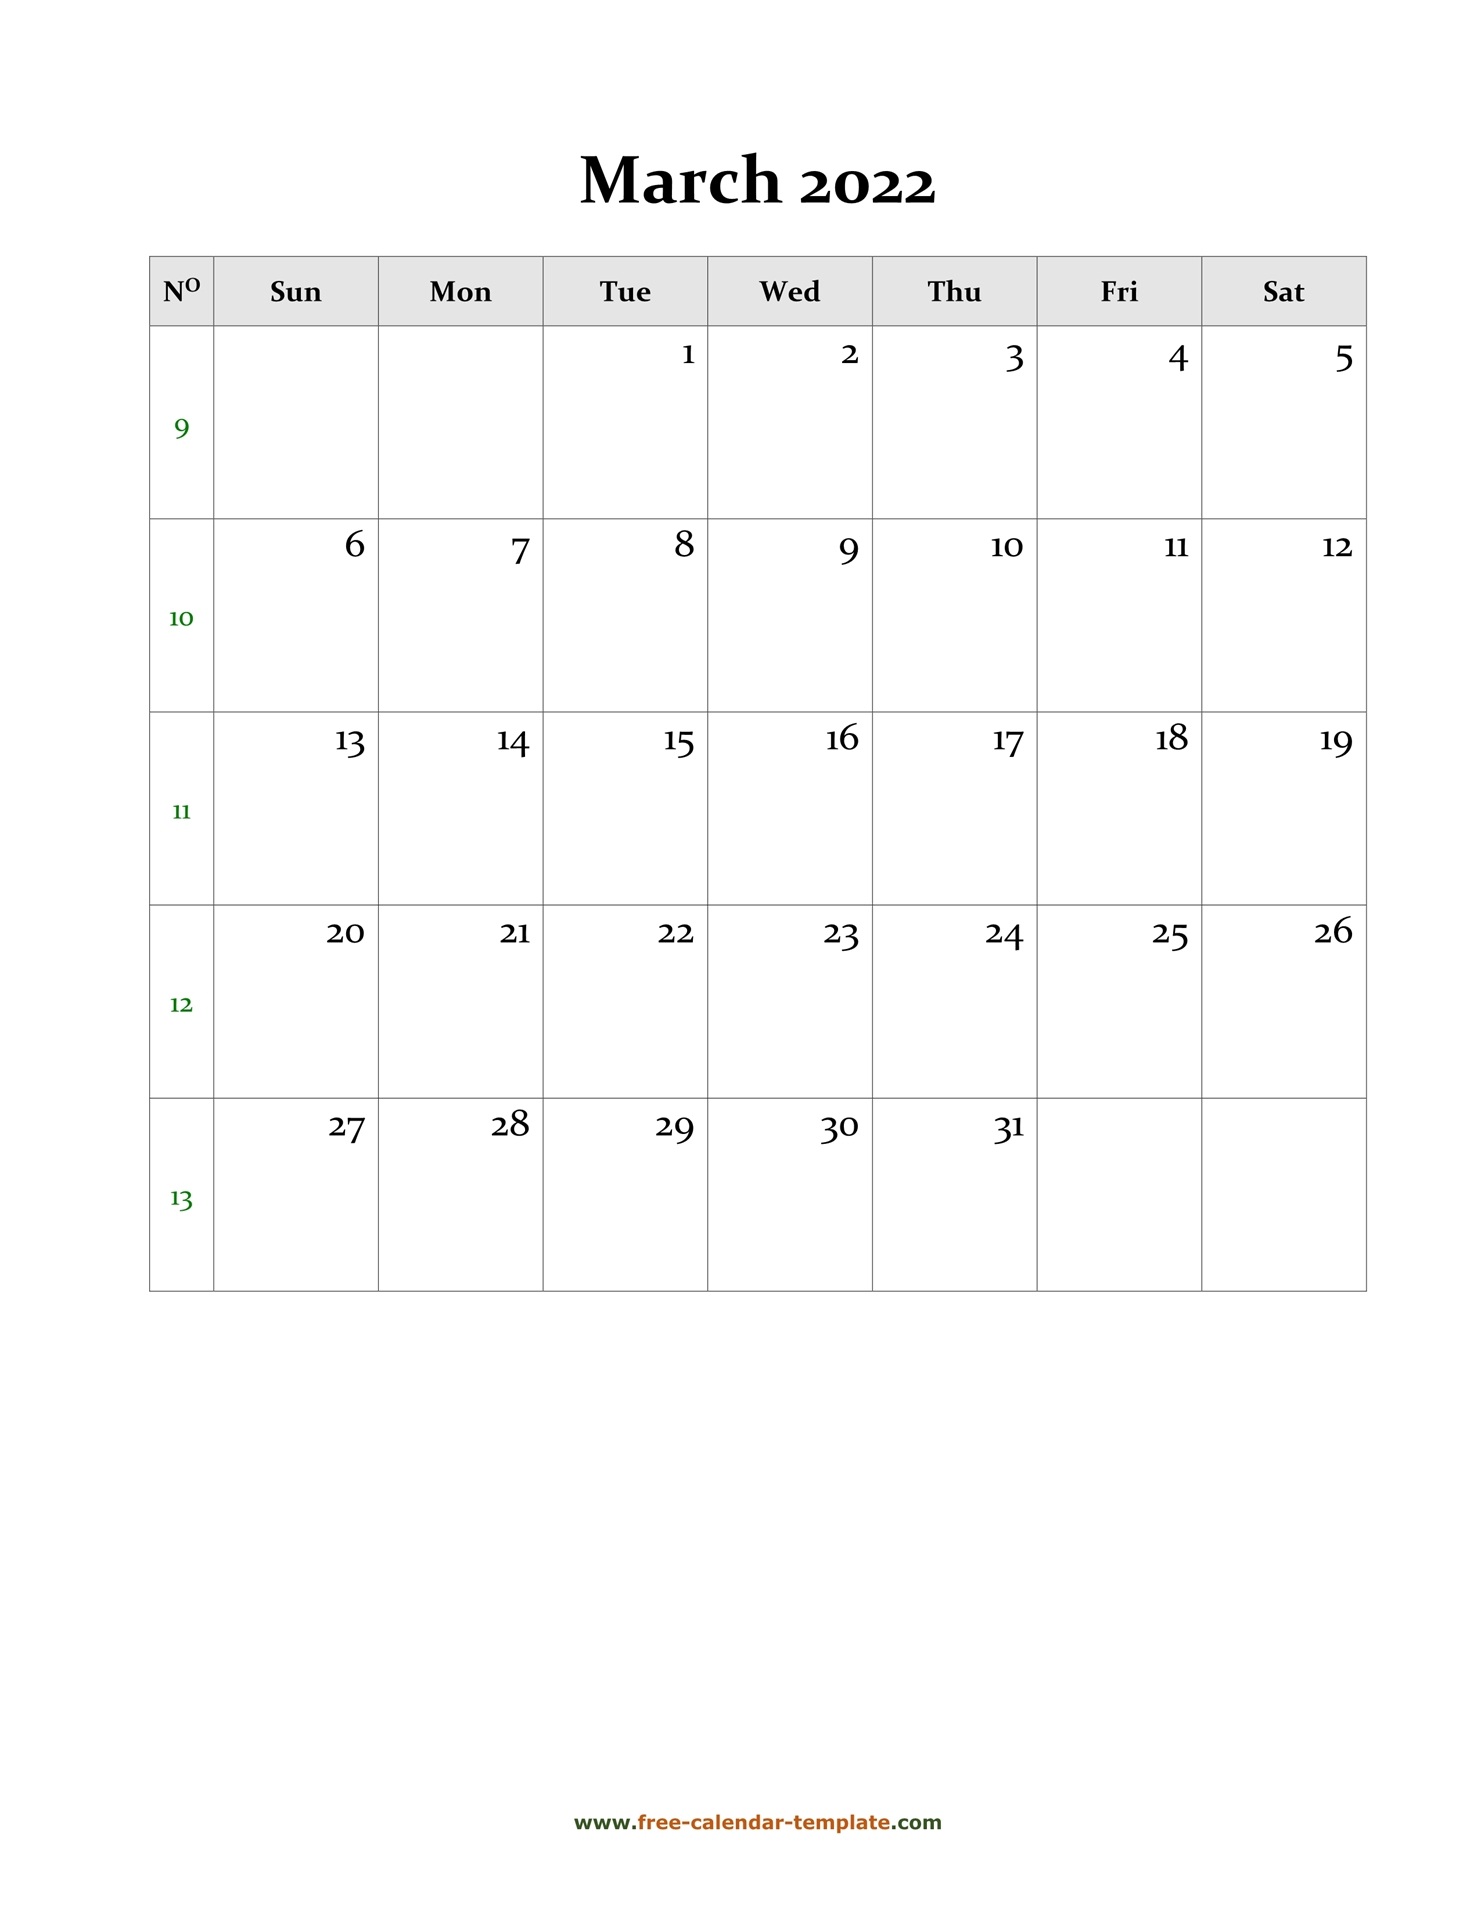 Get March 2022 In Arabic Calendar